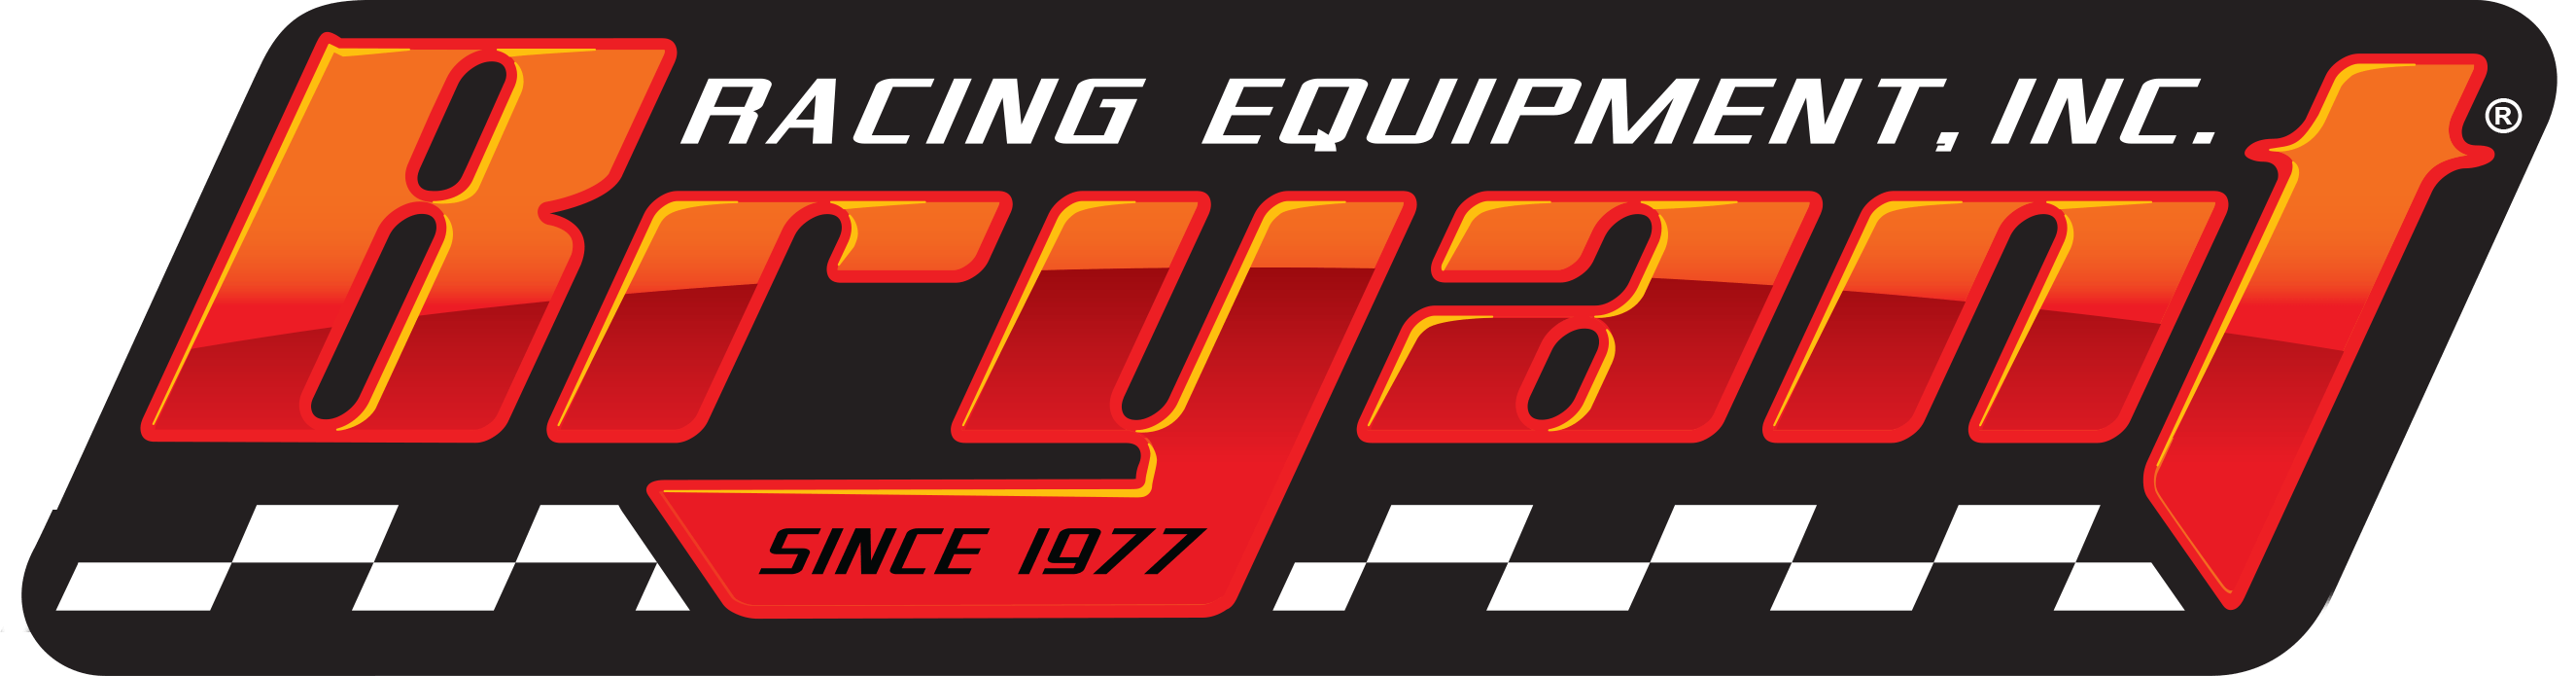 Racing Parts Logo - Bryant Racing Equipment | High Performance Automotive Racing Parts ...